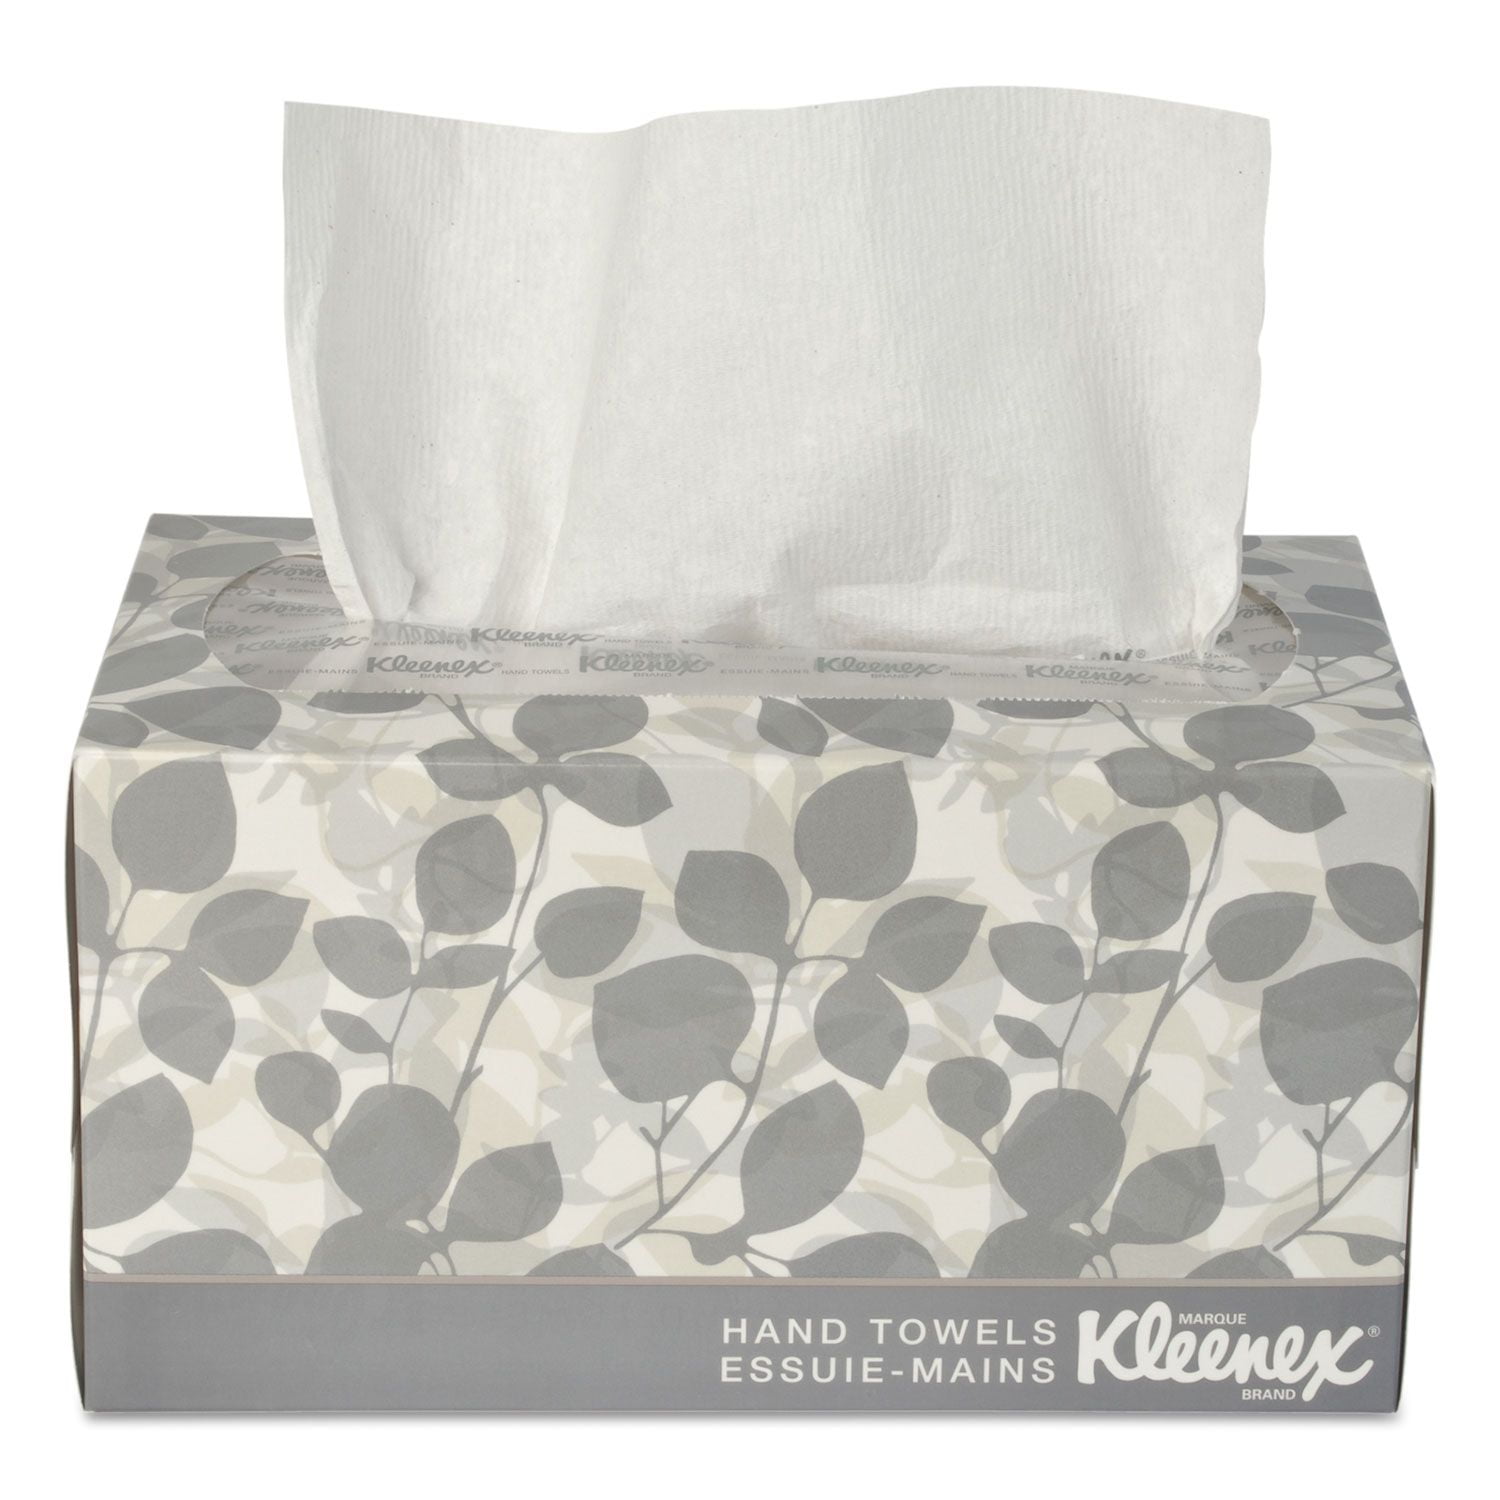 Kleenex Hand Towels POP-UP Box, Pack of 4, Cloth 9 x 10 1/2 - 120 Tissue Per Box. - 2